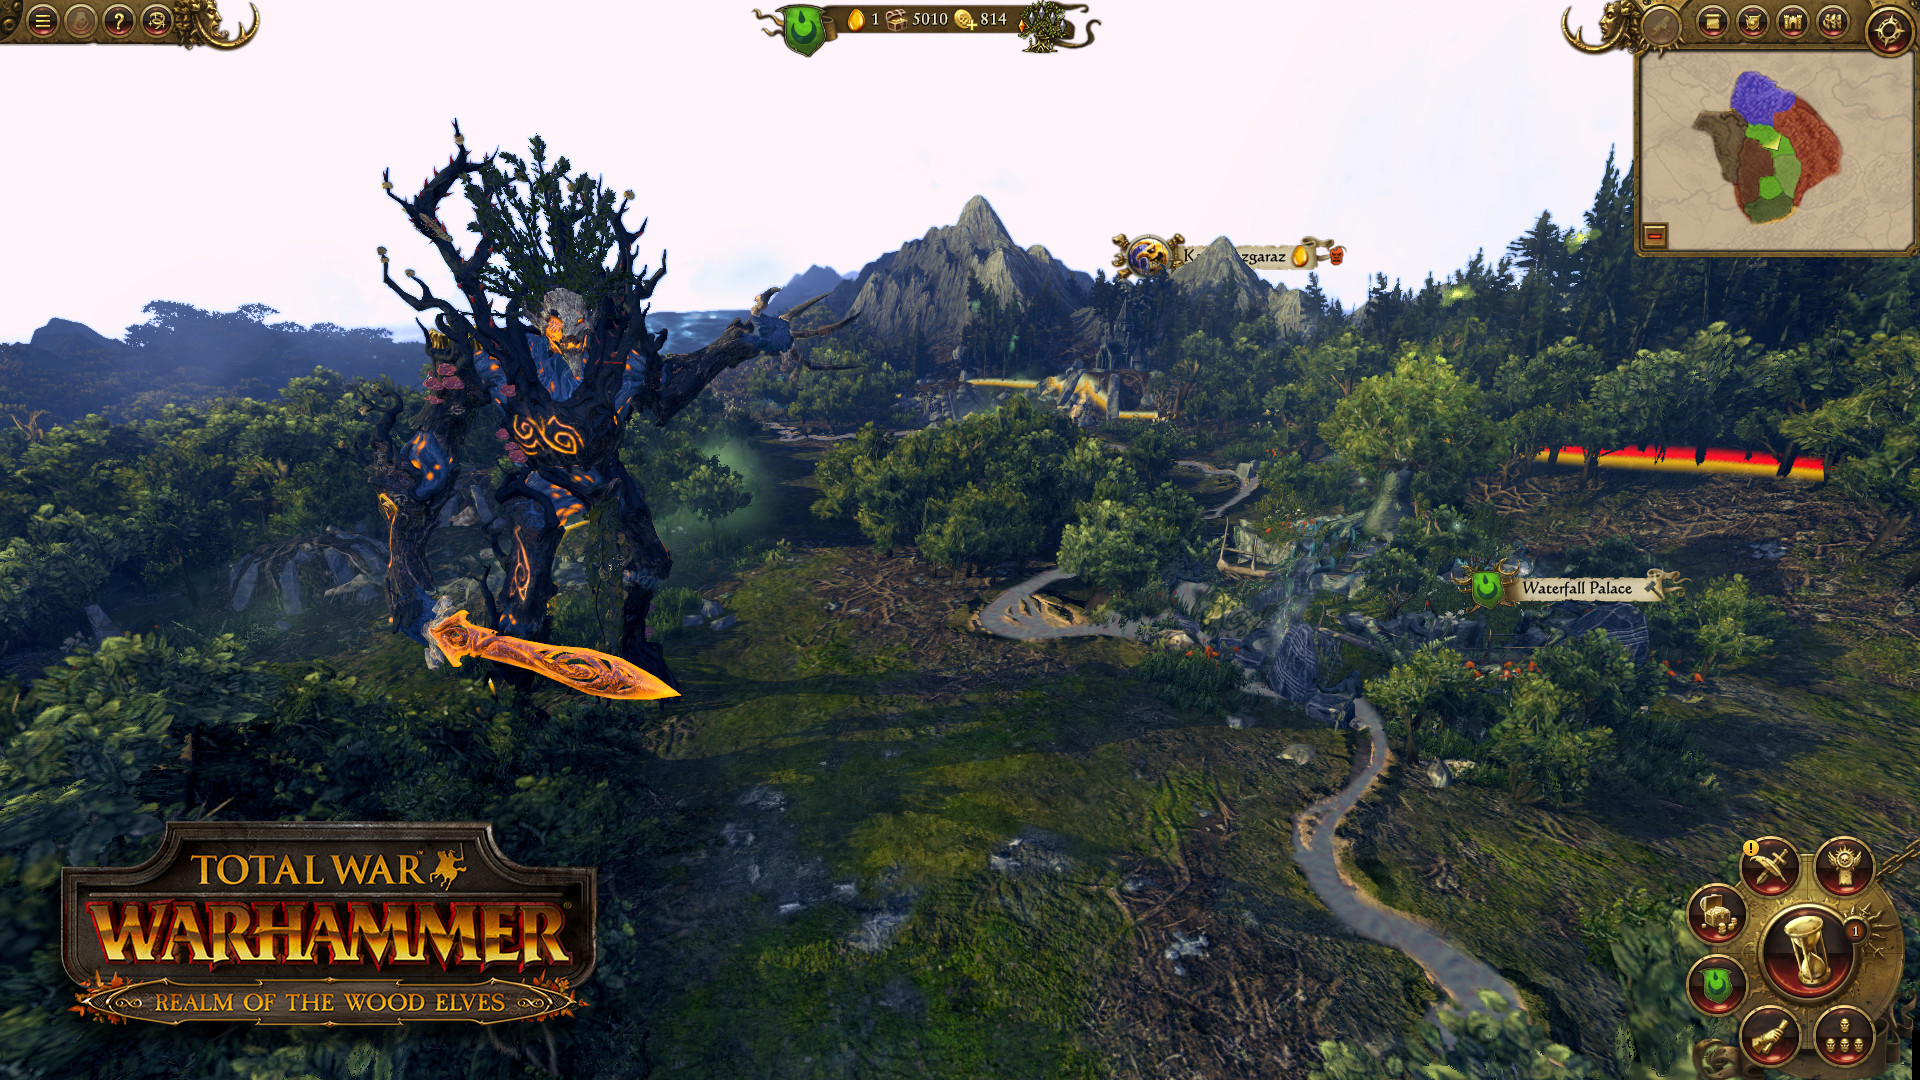 Total War: WARHAMMER - Realm of The Wood Elves screenshot